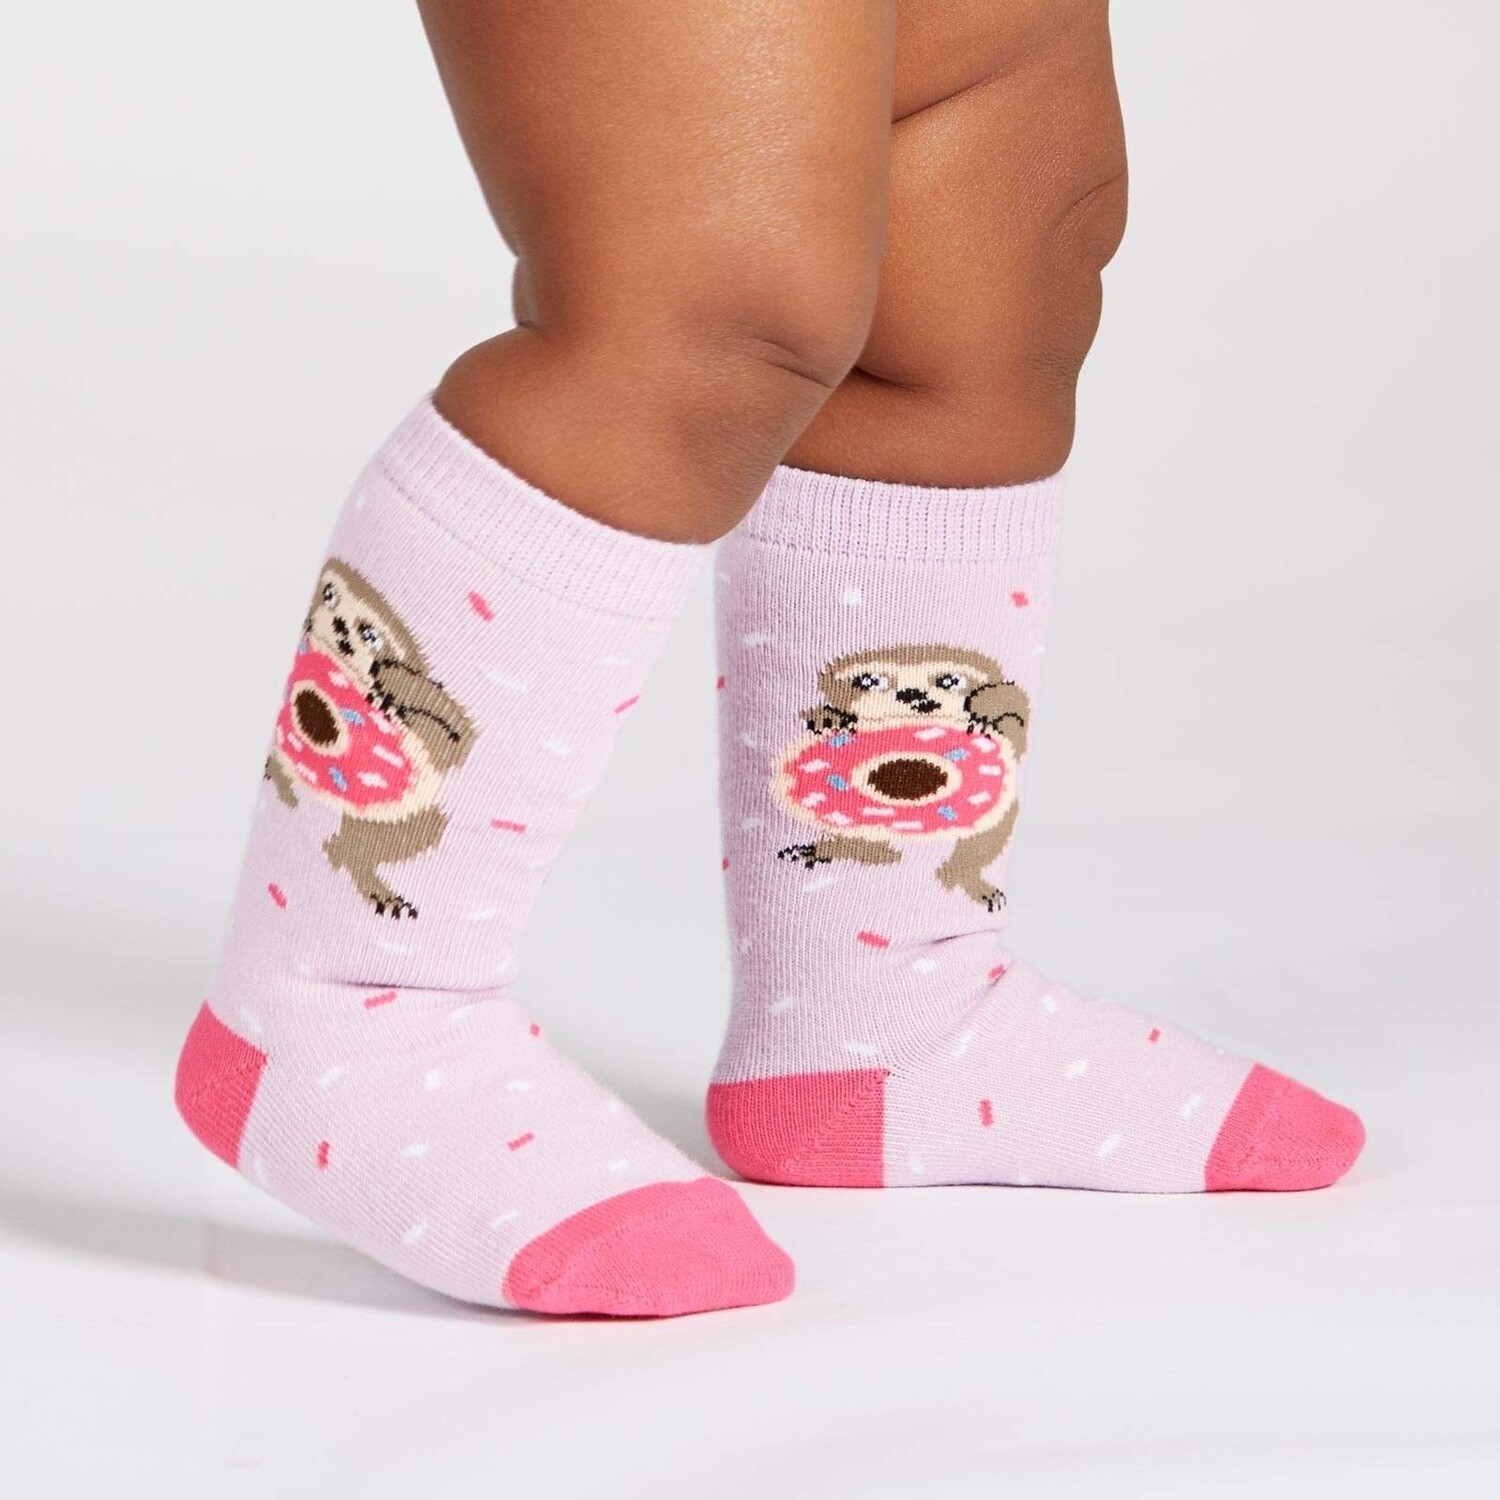 Sock It To Me - Toddler Knee-high Socks | Snackin' Sloth